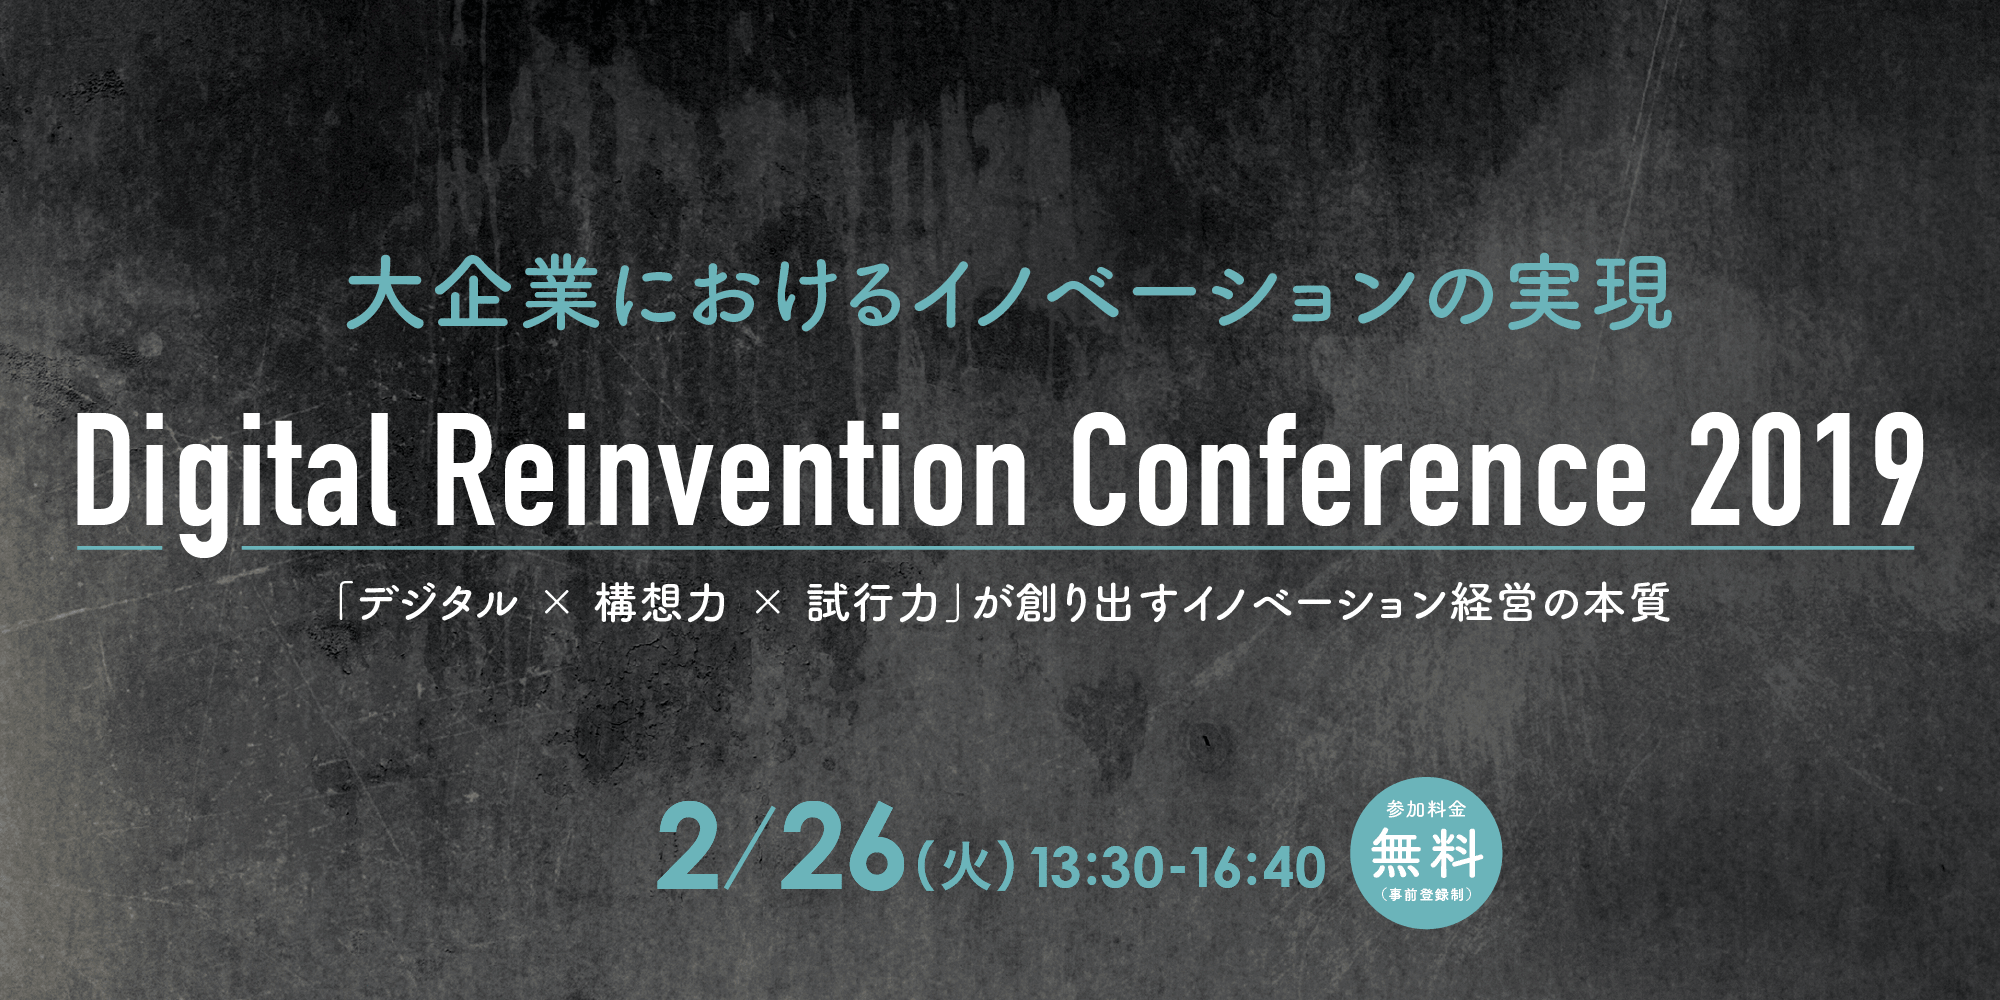 Digital Reinvention Conference 2019